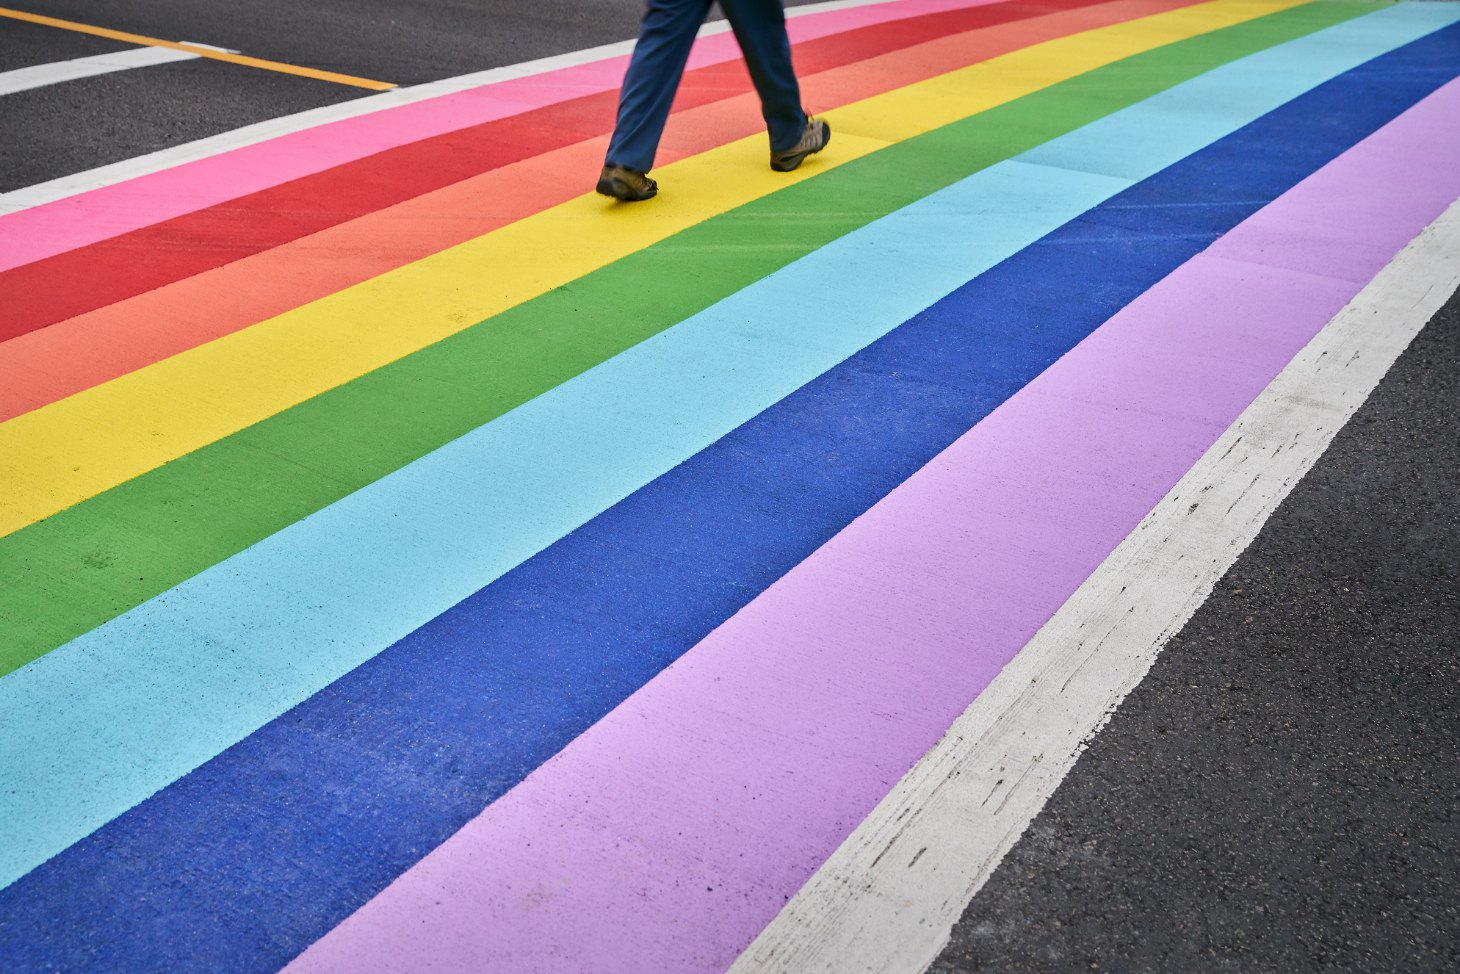 Pedestrian in rainbow crosswalk